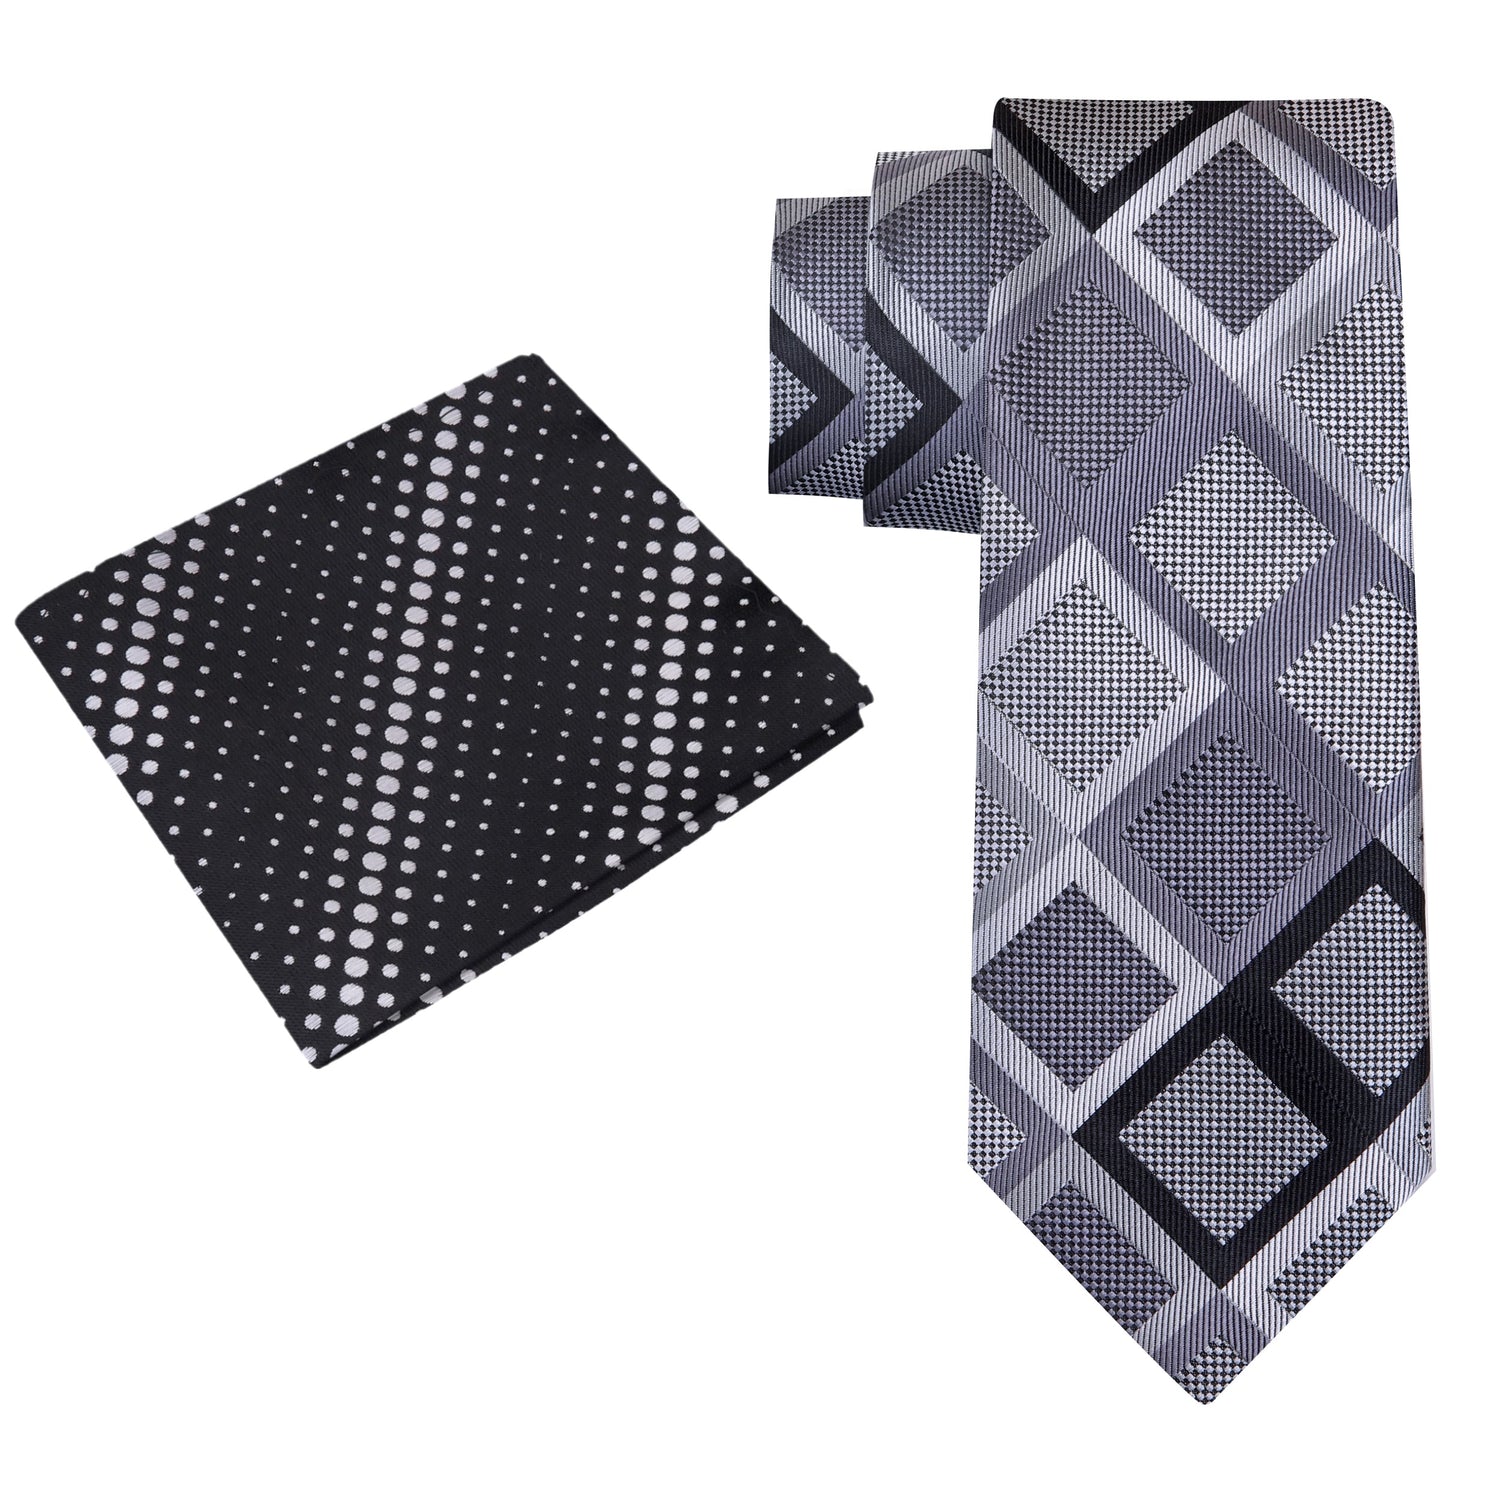 Alt View: Grey Black Geometric King Tut Diamonds Tie and Black Silver Dots Square 